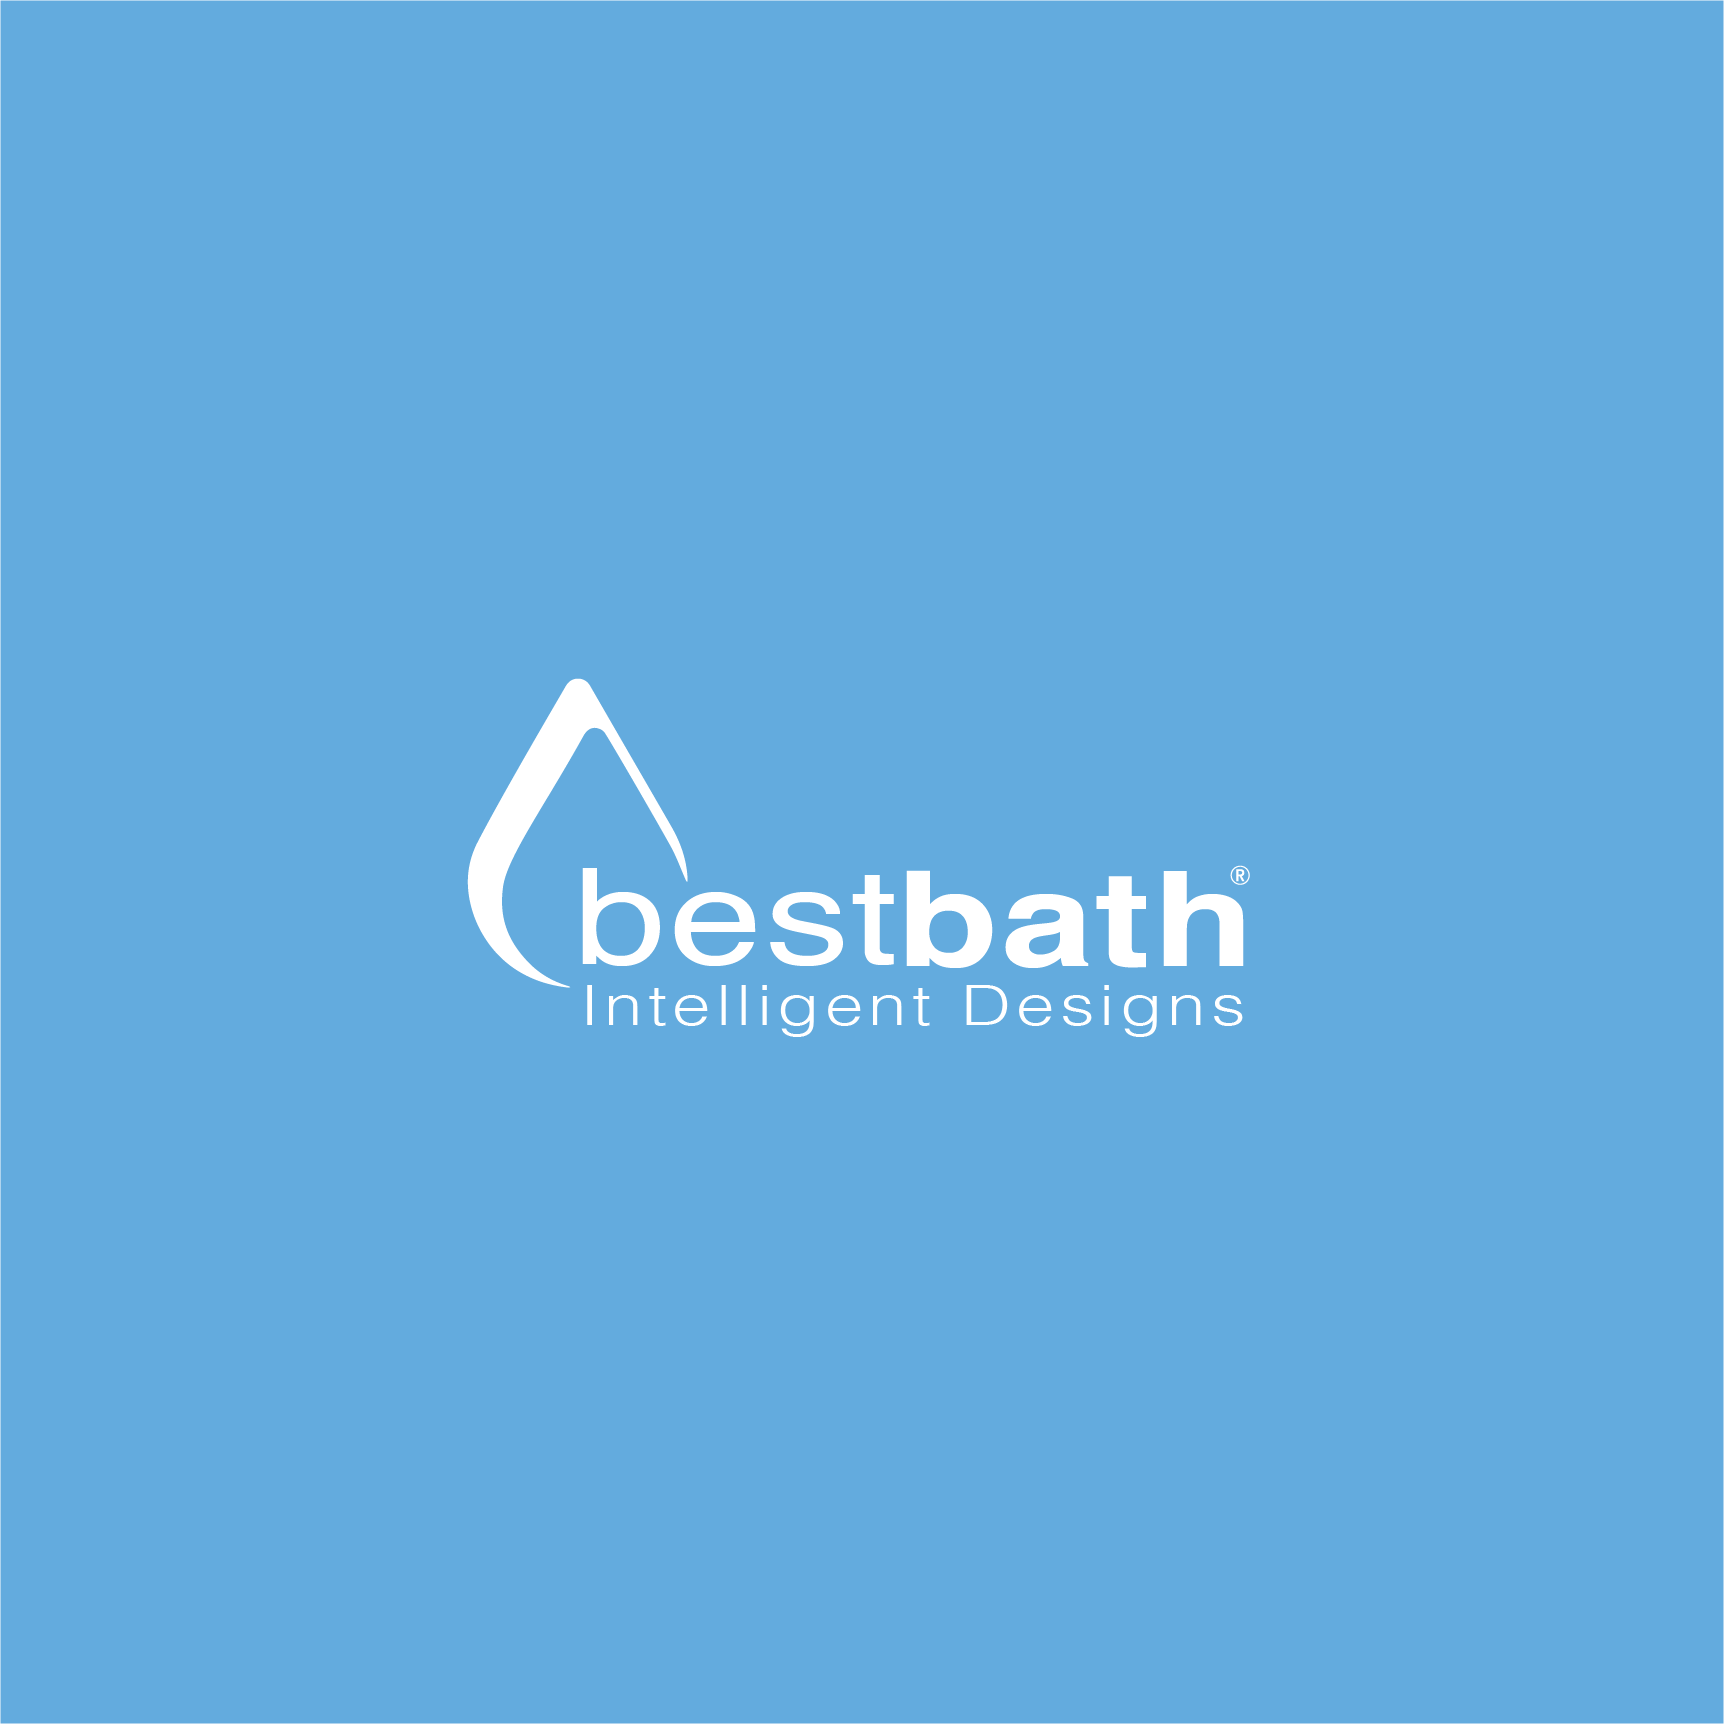 K+BB: Bestbath Videos Provide Instruction on Shower System Installation